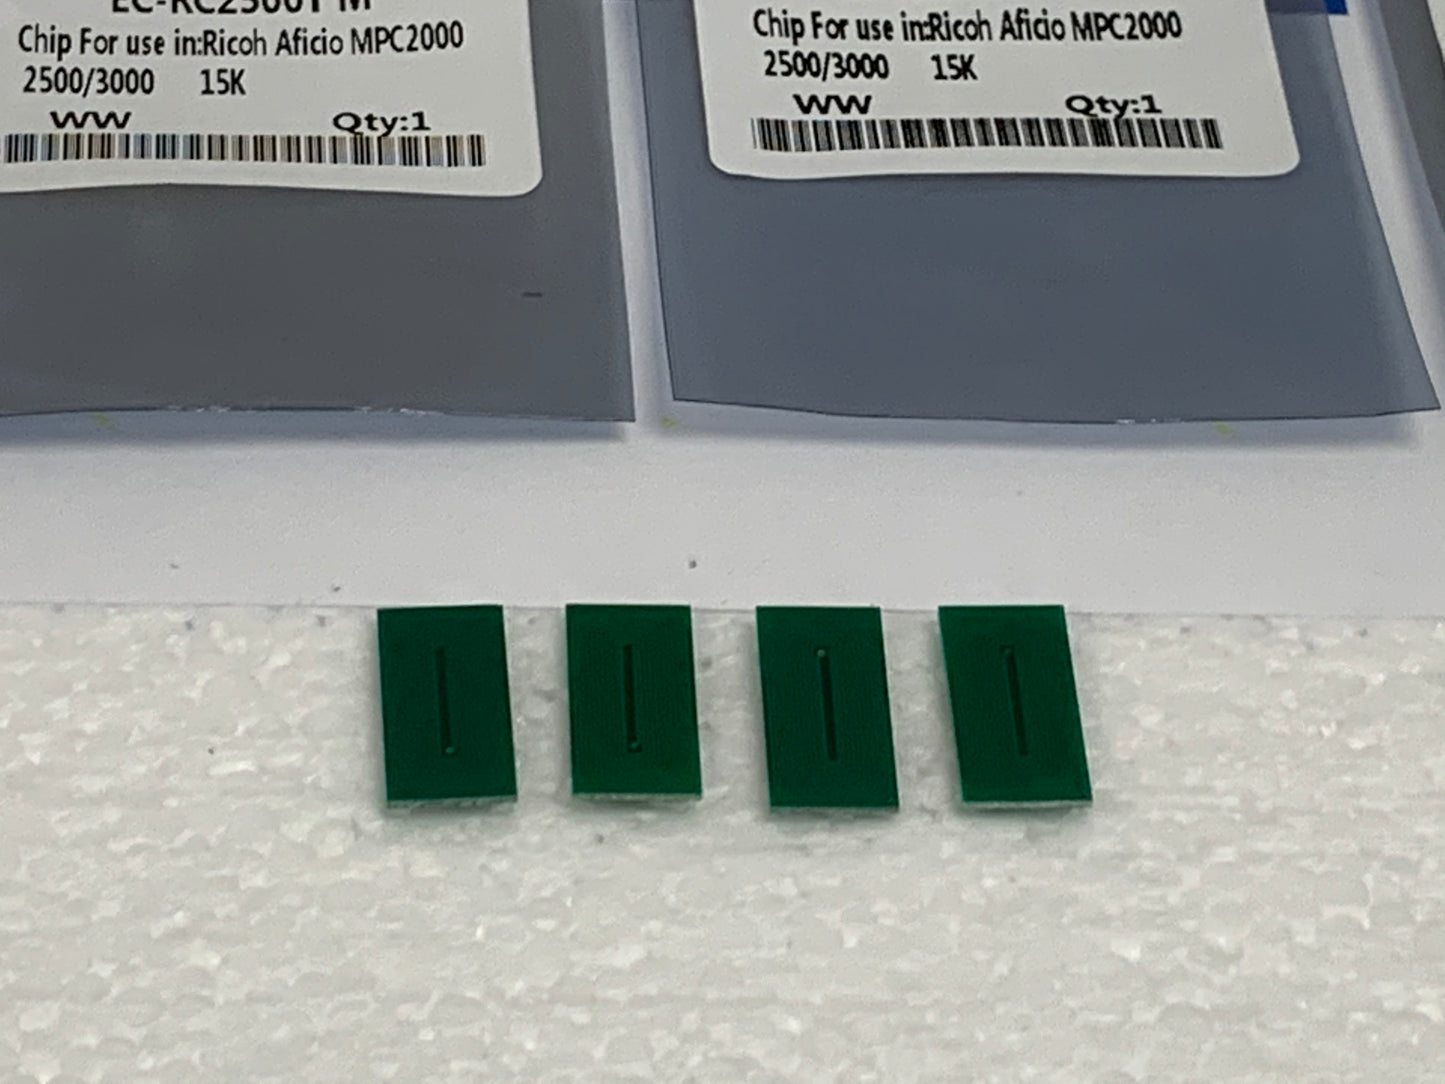 4 x Toner Reset Chip for Ricoh Aficio MPC2000, MPC2500, MPC3000 Printer Refill - SOP-TECHNOLOGIES, INC.